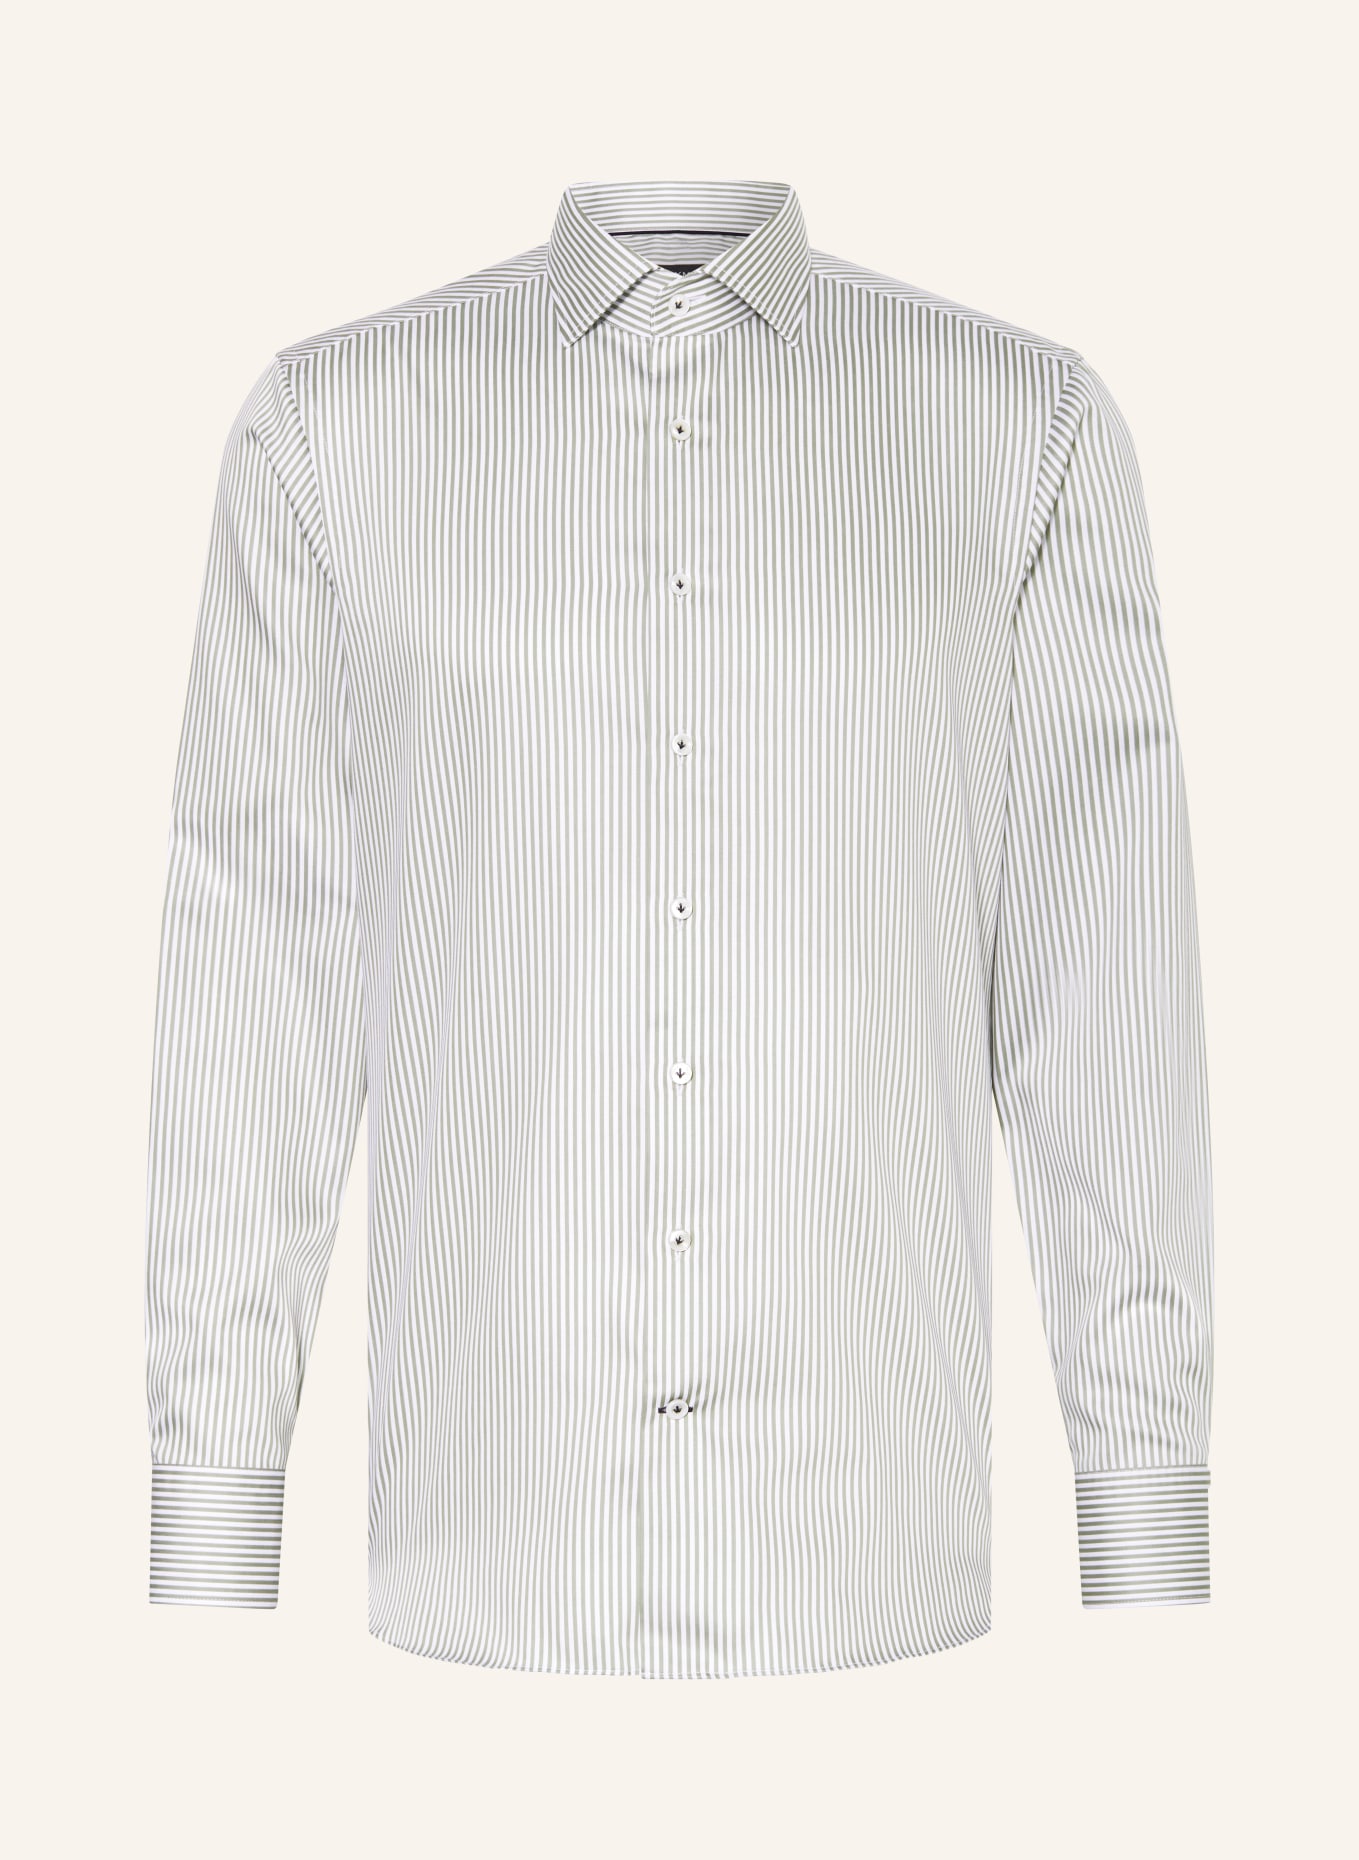 OLYMP SIGNATURE Hemd tailored fit, Farbe: HELLGRÜN/ WEISS (Bild 1)